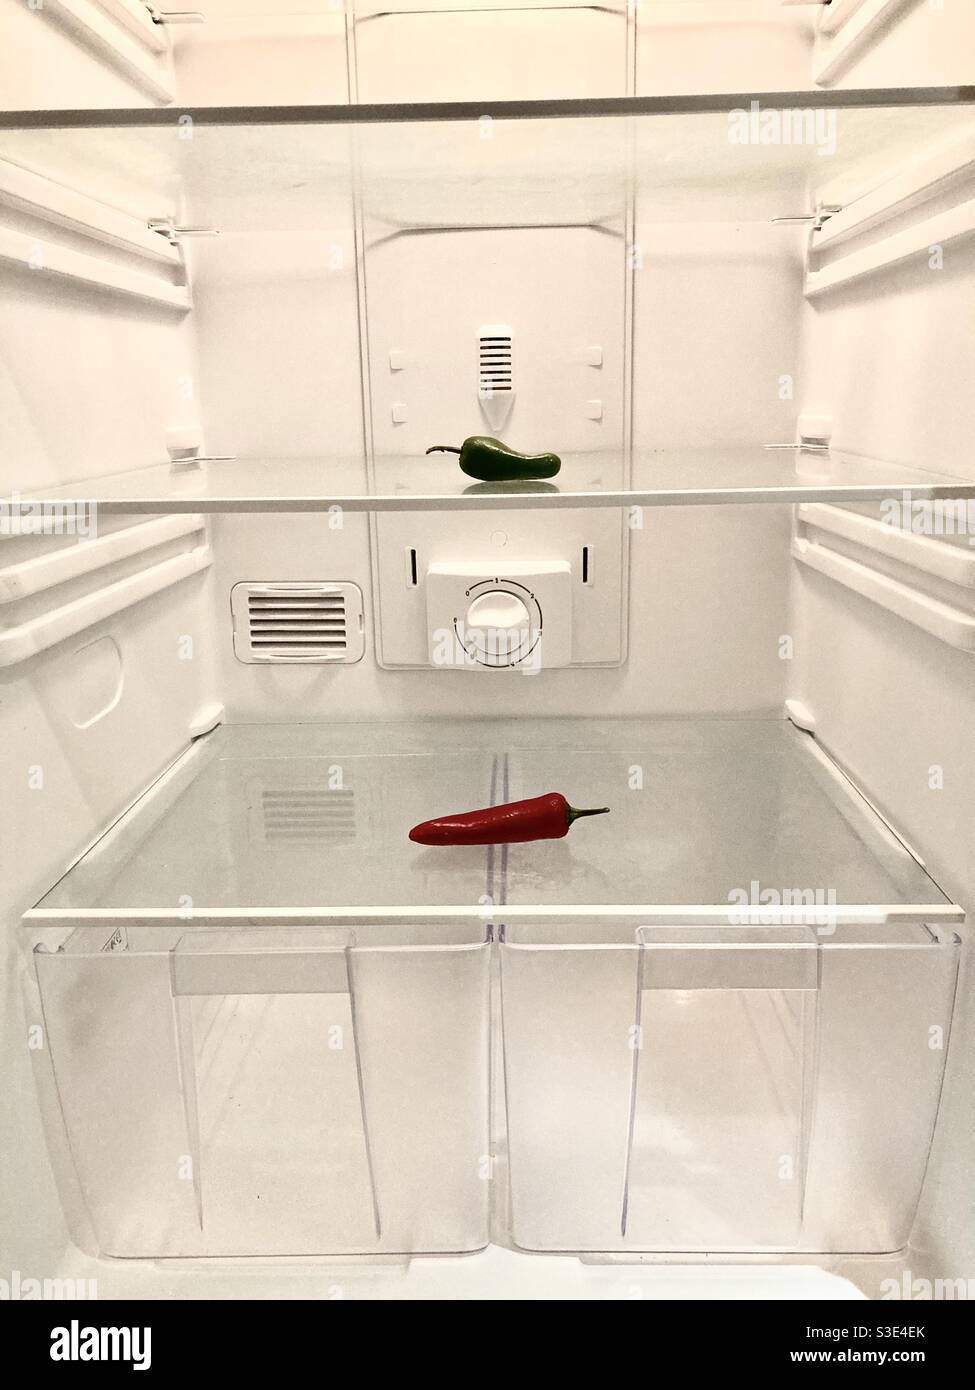 Chillis in the fridge Stock Photo